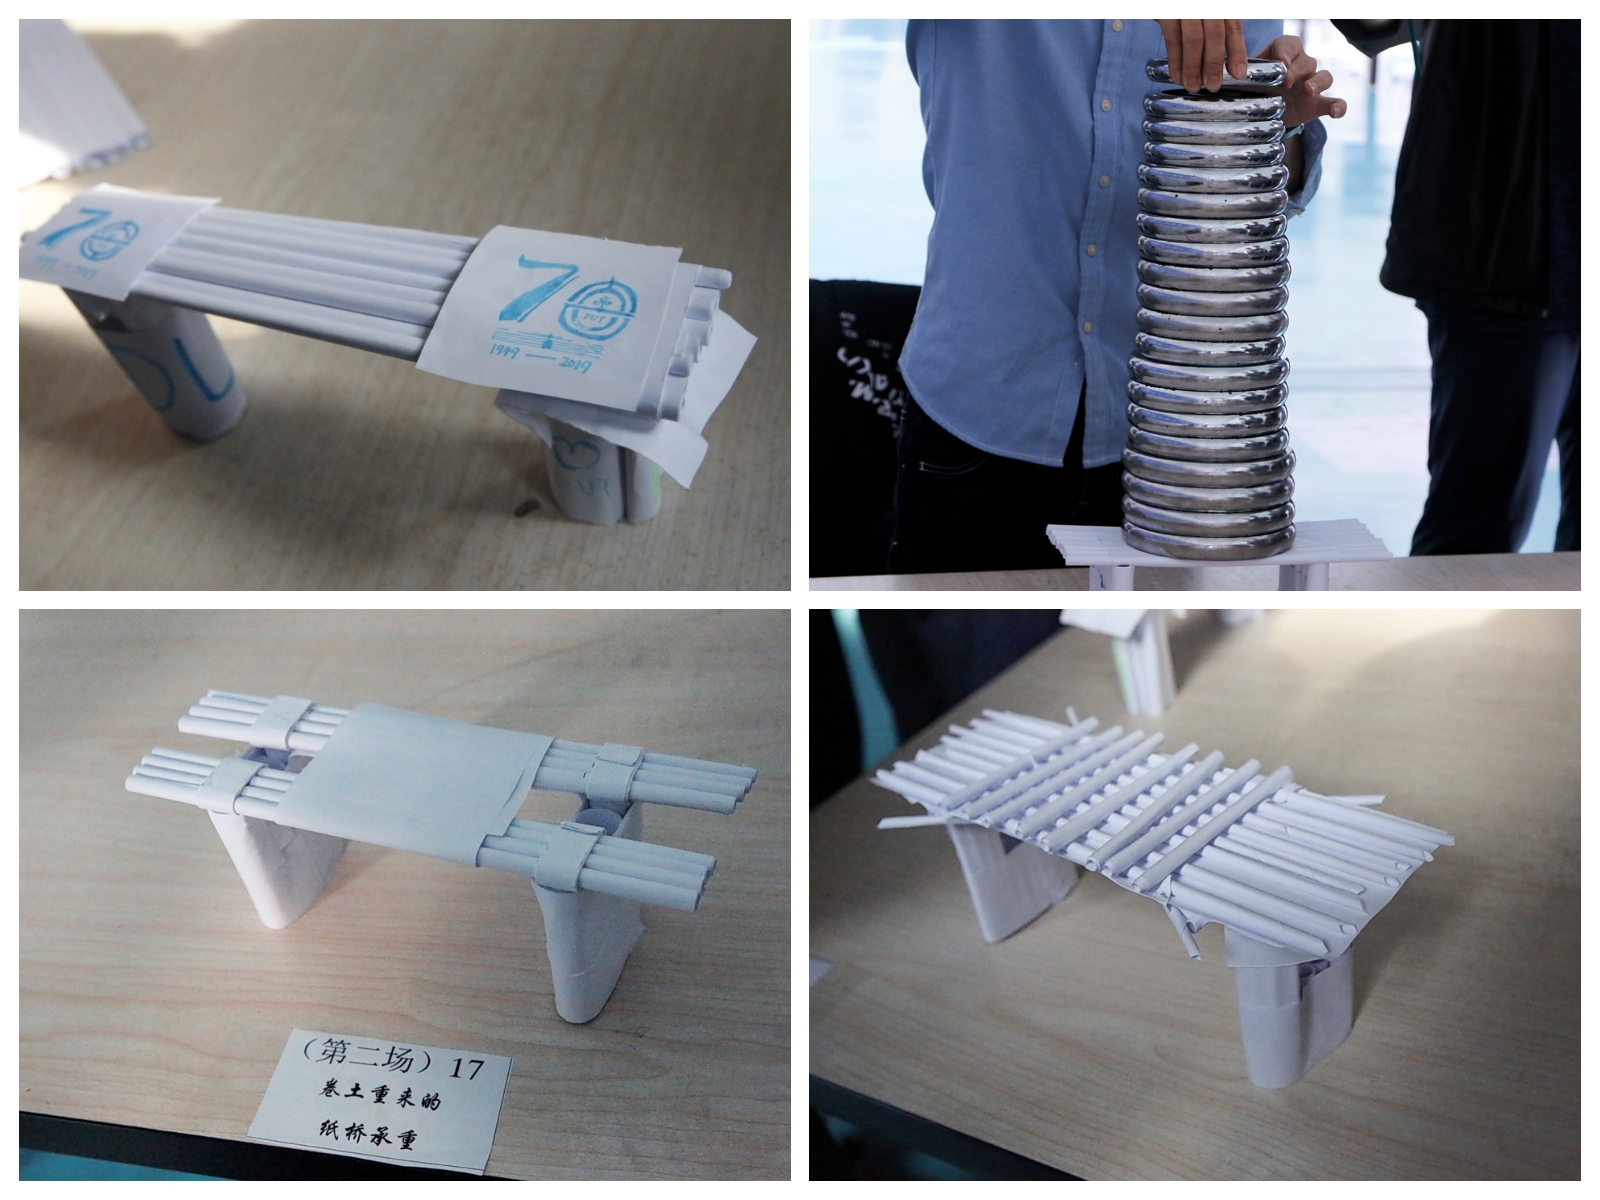 A4制作最坚固纸桥,纸桥怎样做最固图片,用报纸做桥的图片_大山谷图库